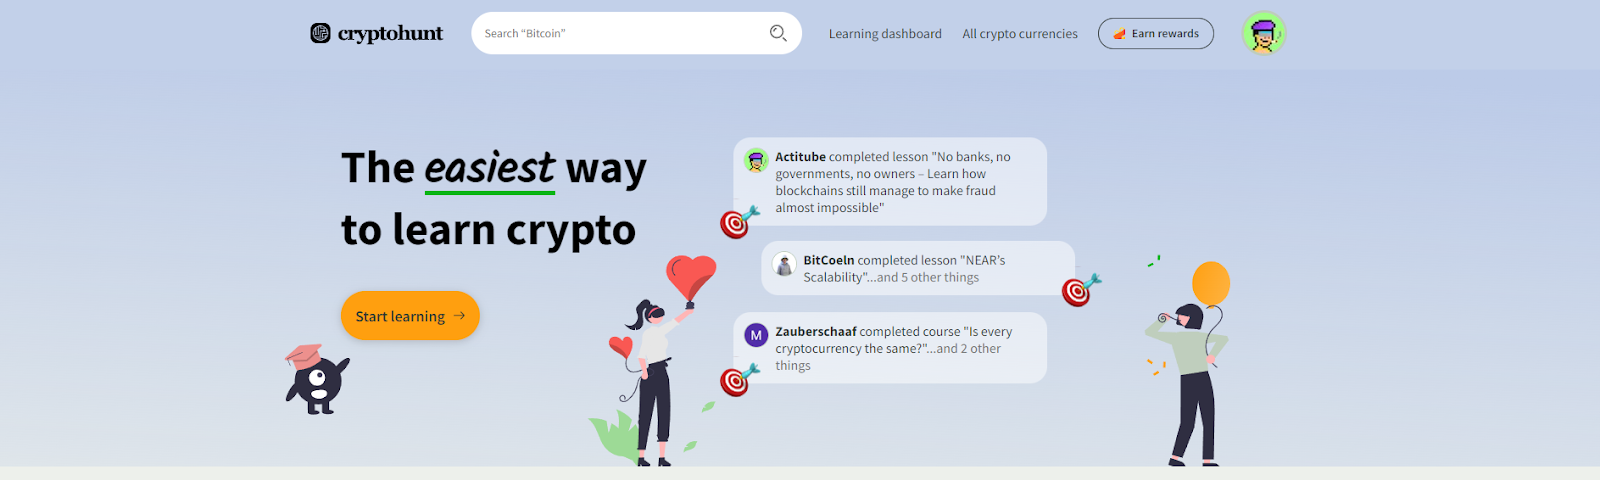 Cryptohunt website for learning Blockchain